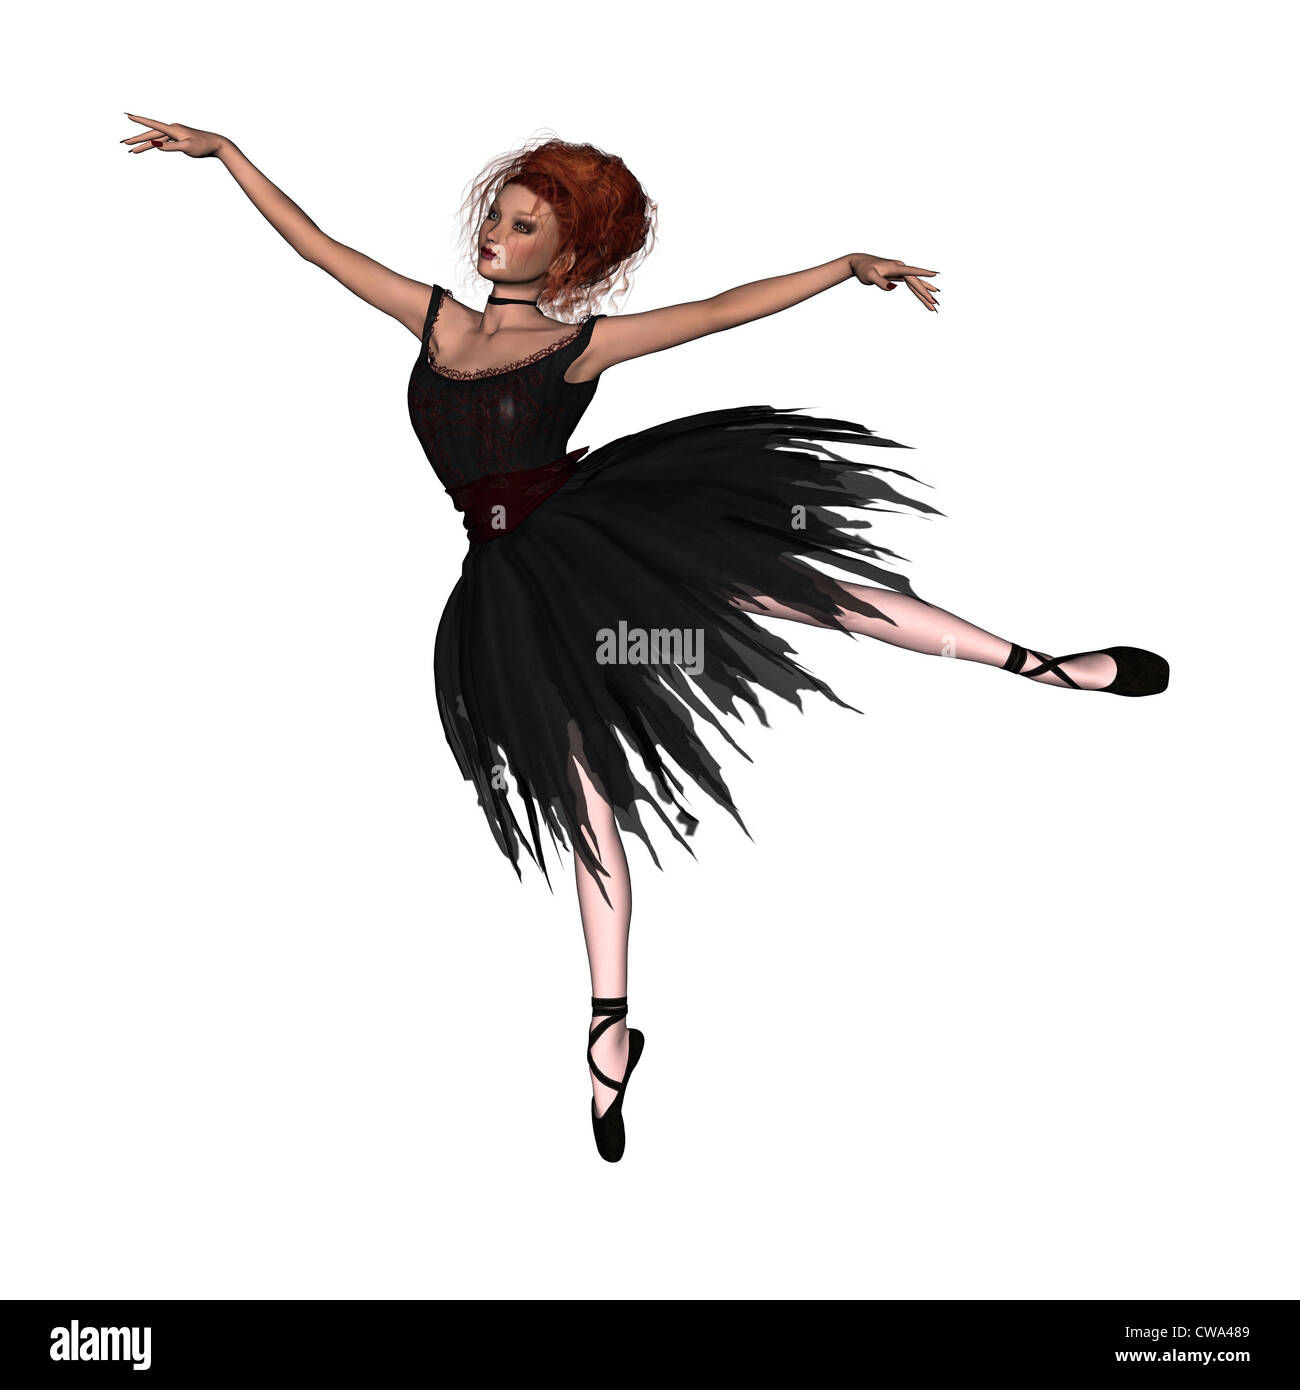 Ballerina gotica - 1 Foto stock - Alamy